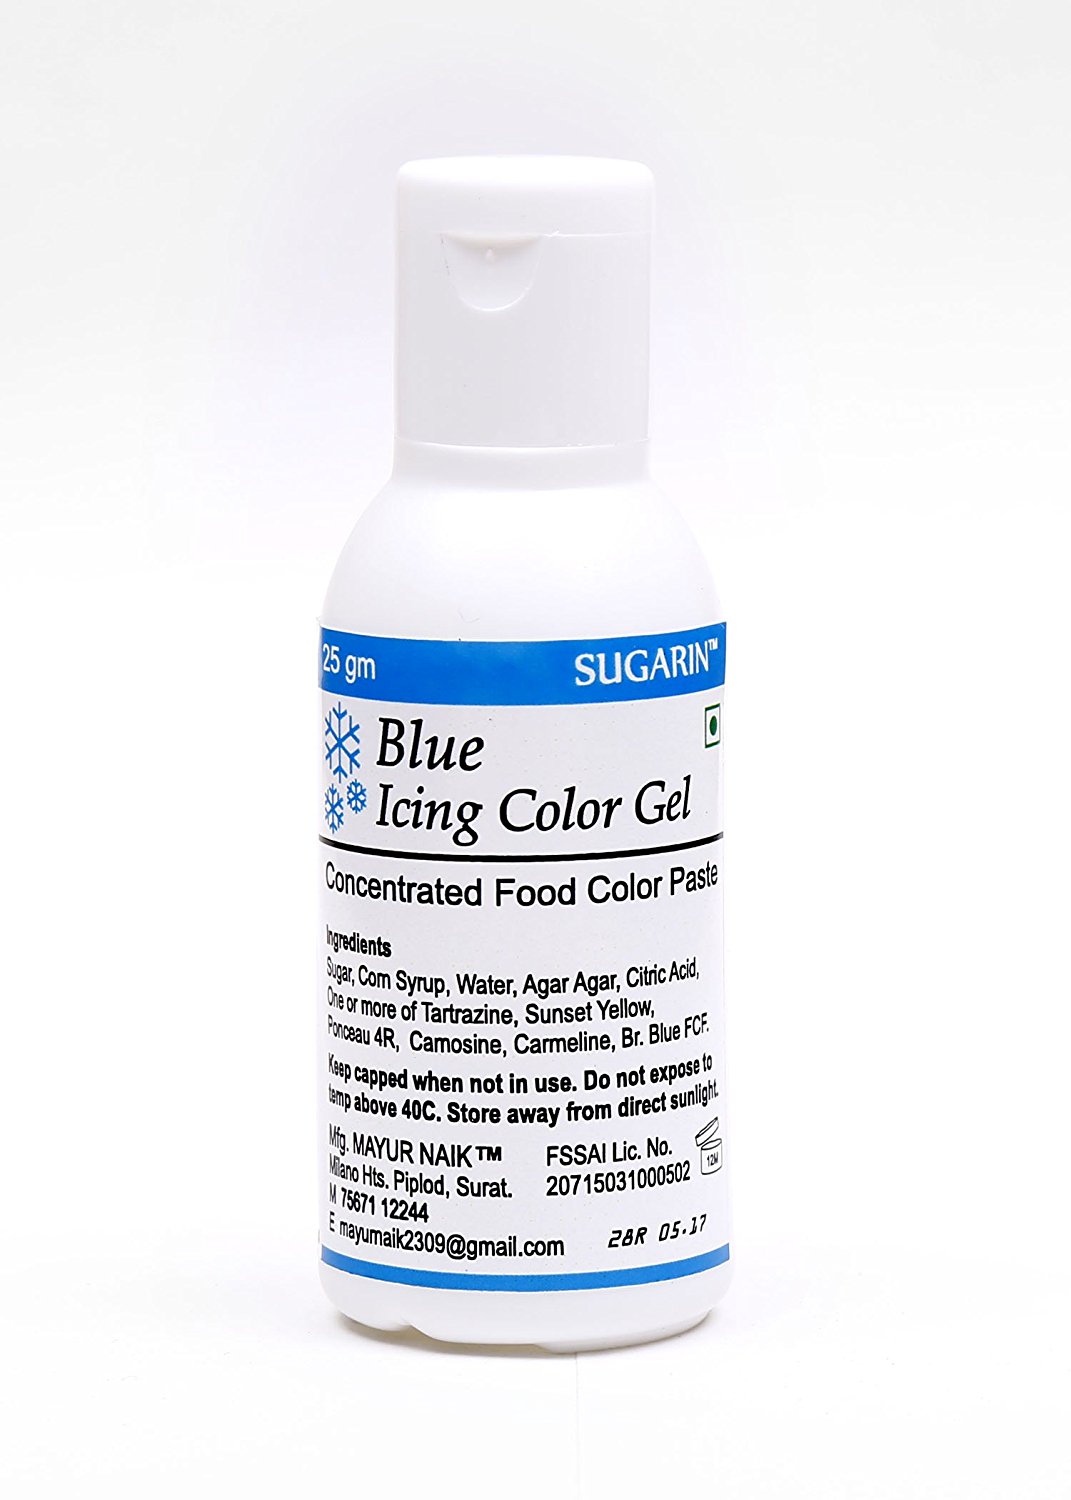 31684 Sugarin Icing Color Gel for Fondant, Blue, 25 gram